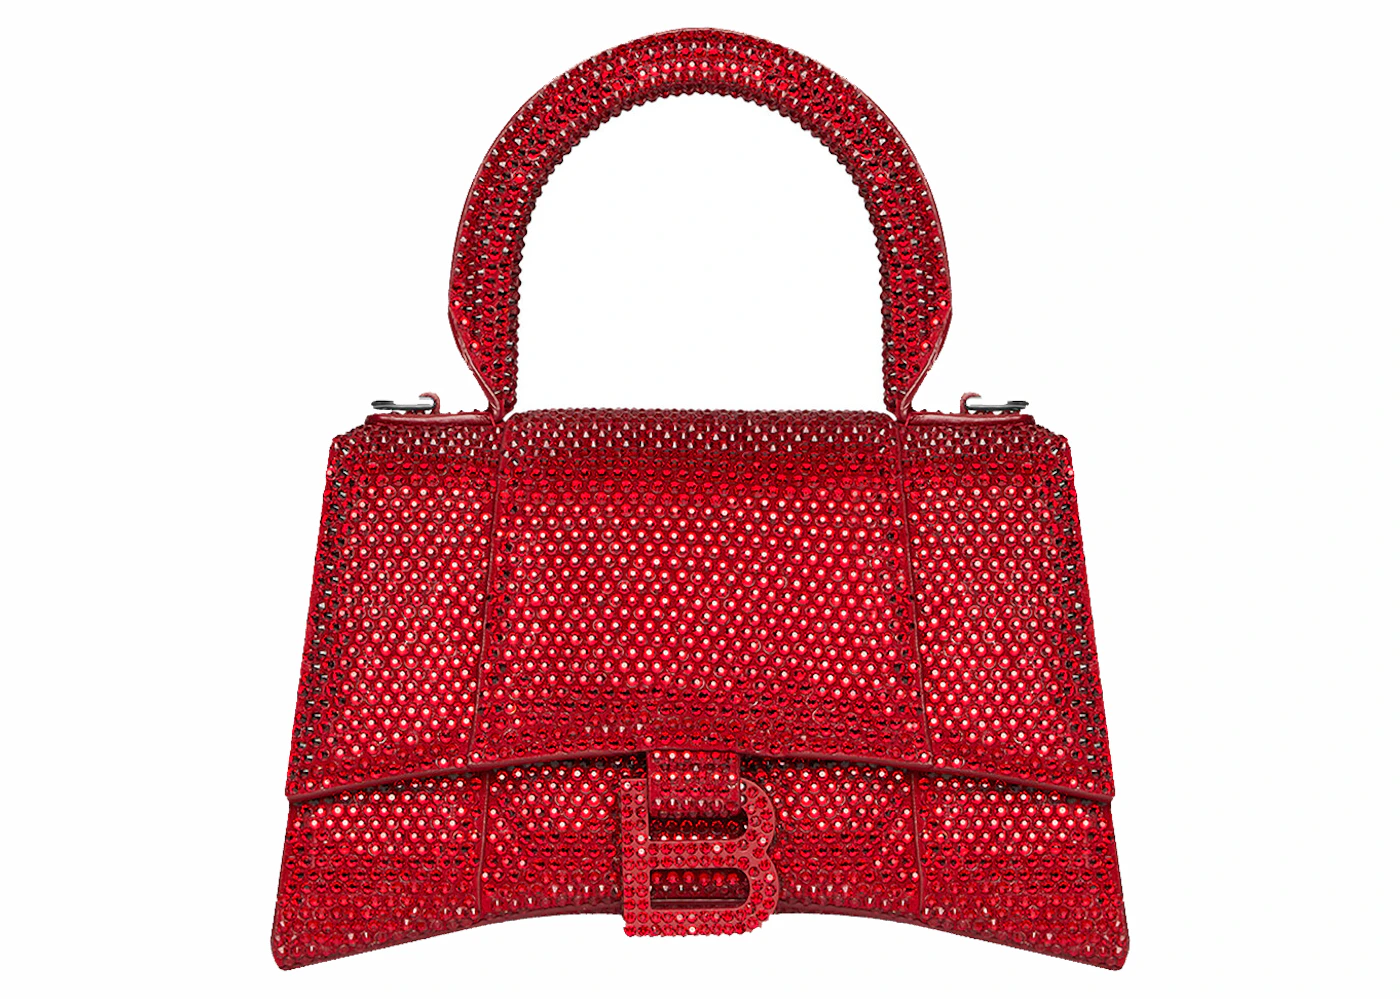 Balenciaga Hourglass XS Handbag Rhinestones Red in Calfskin Leather/Crystals Hardware - US